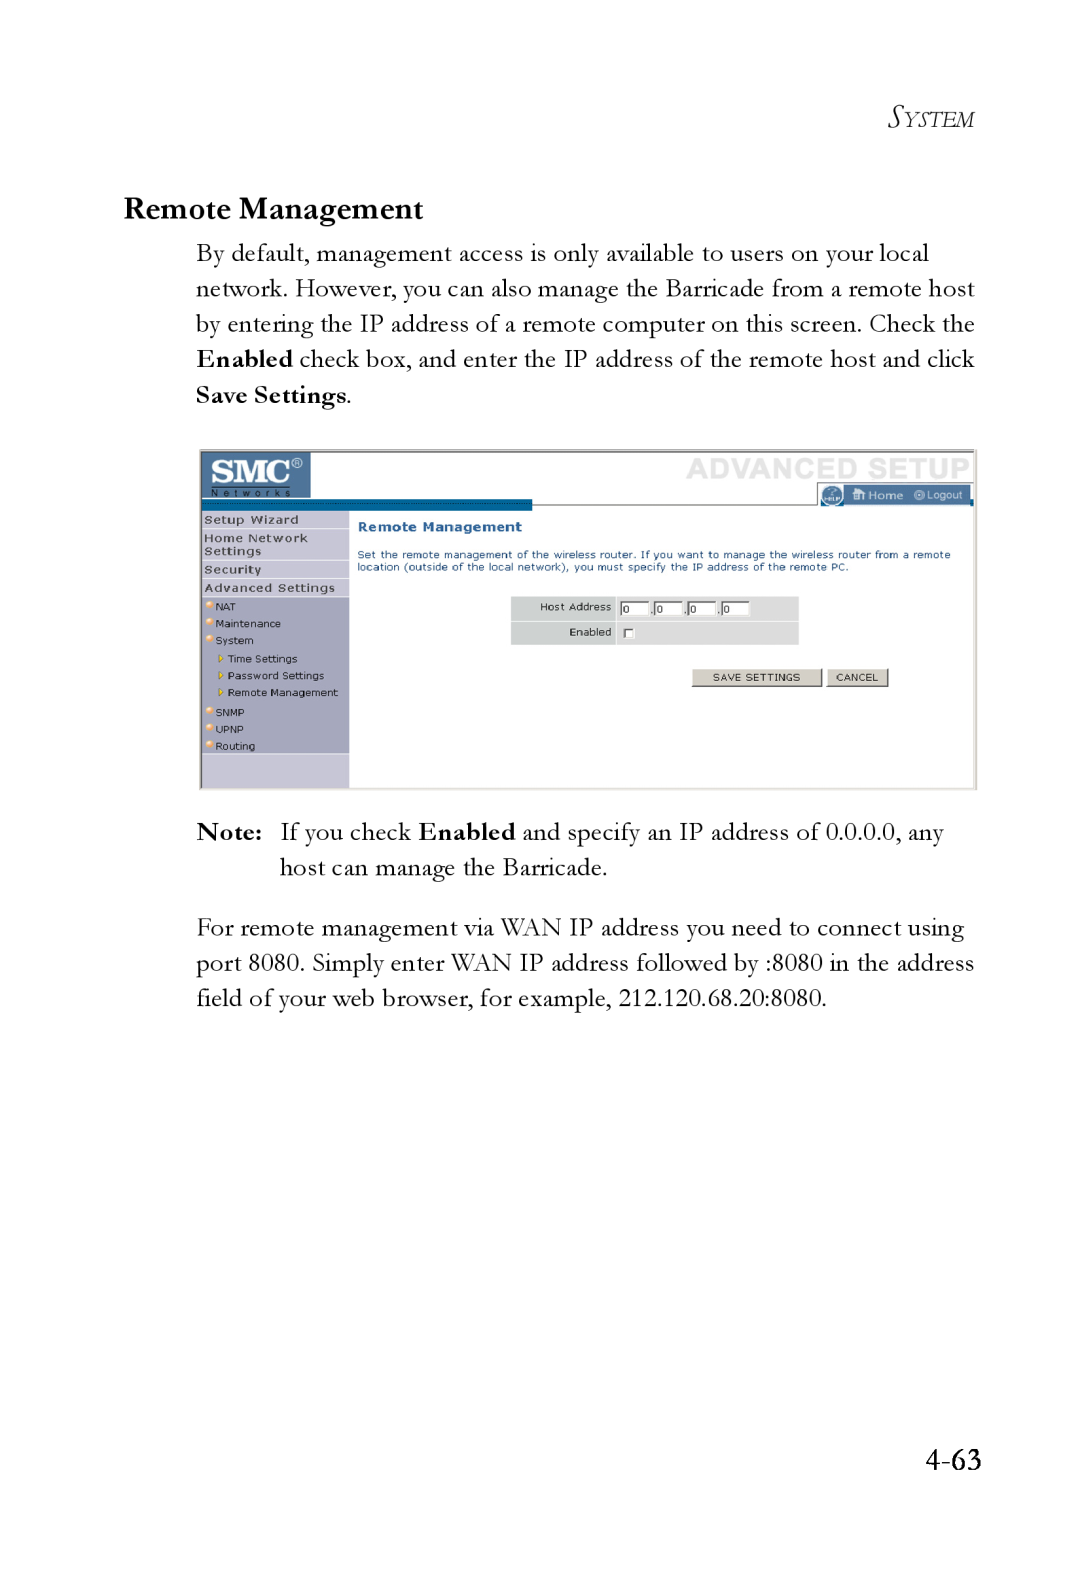 SMC Networks SMCWBR14T-G manual 4-63, Remote Management 